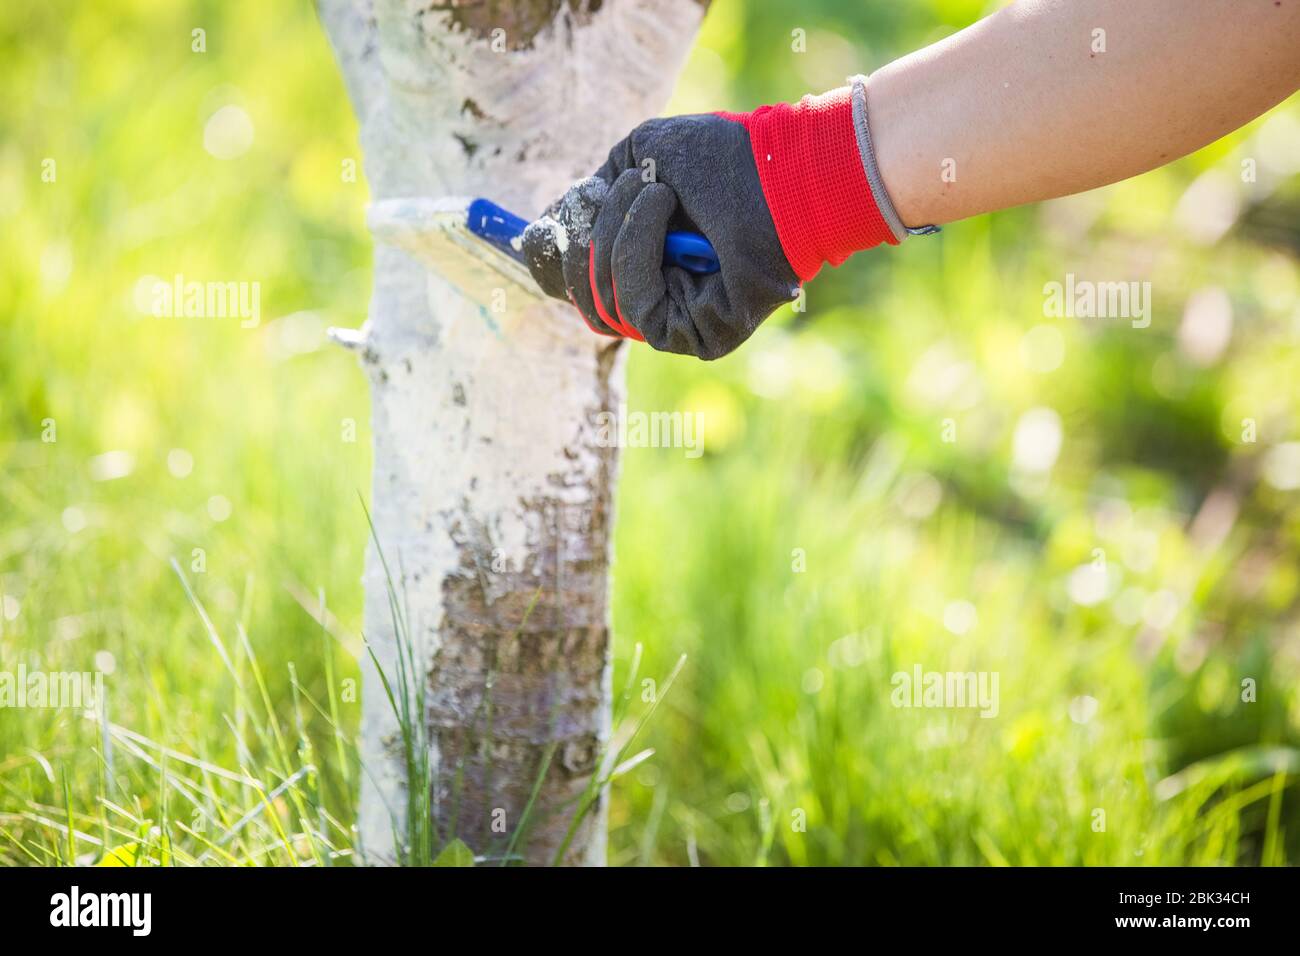 Spring whitewashing trees Stock Photo